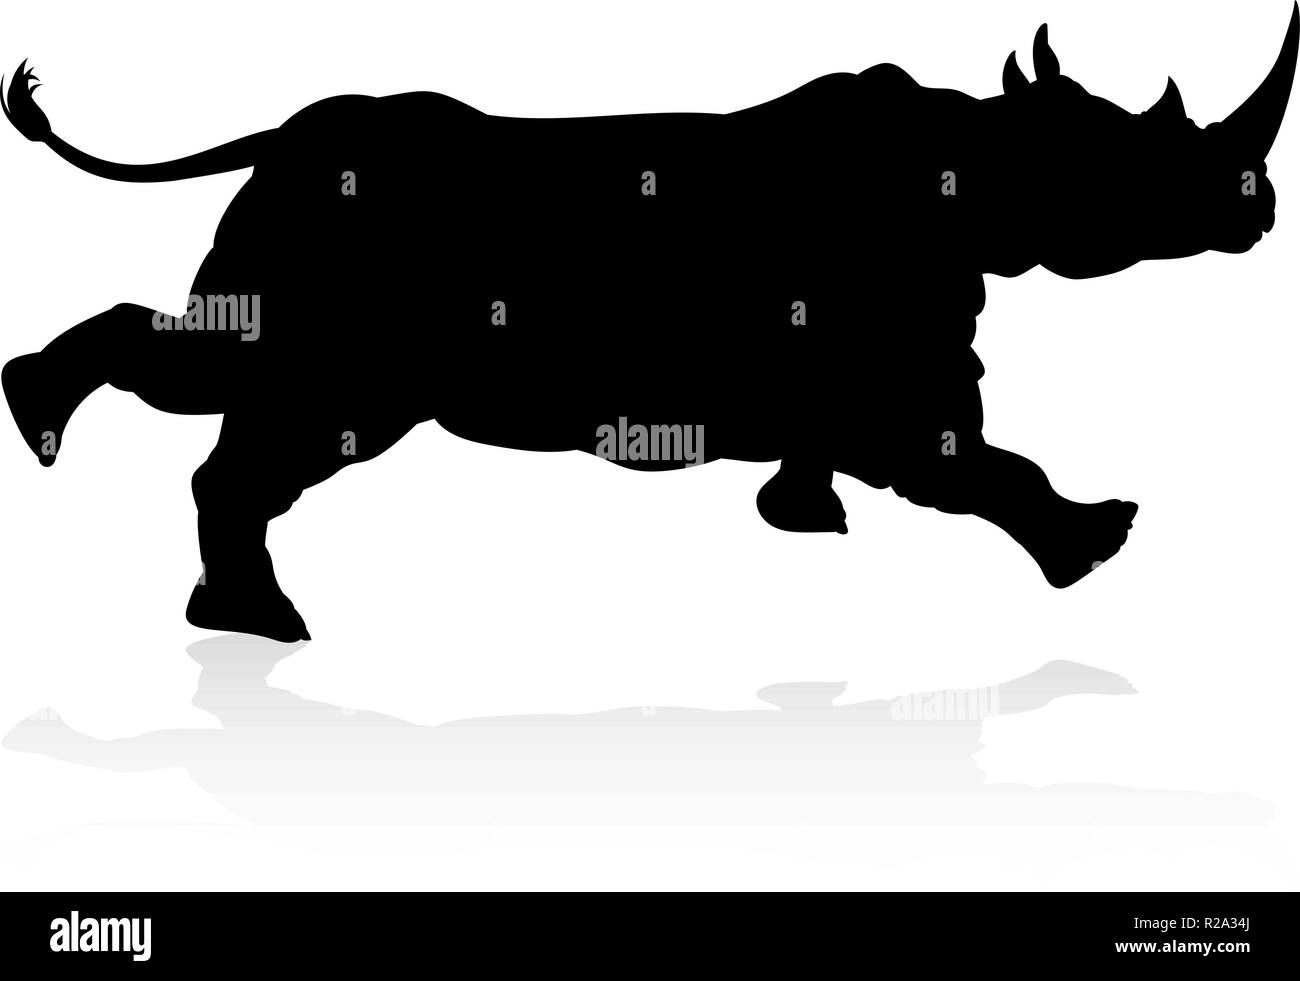 Rhino Animal Silhouette Stock Vector